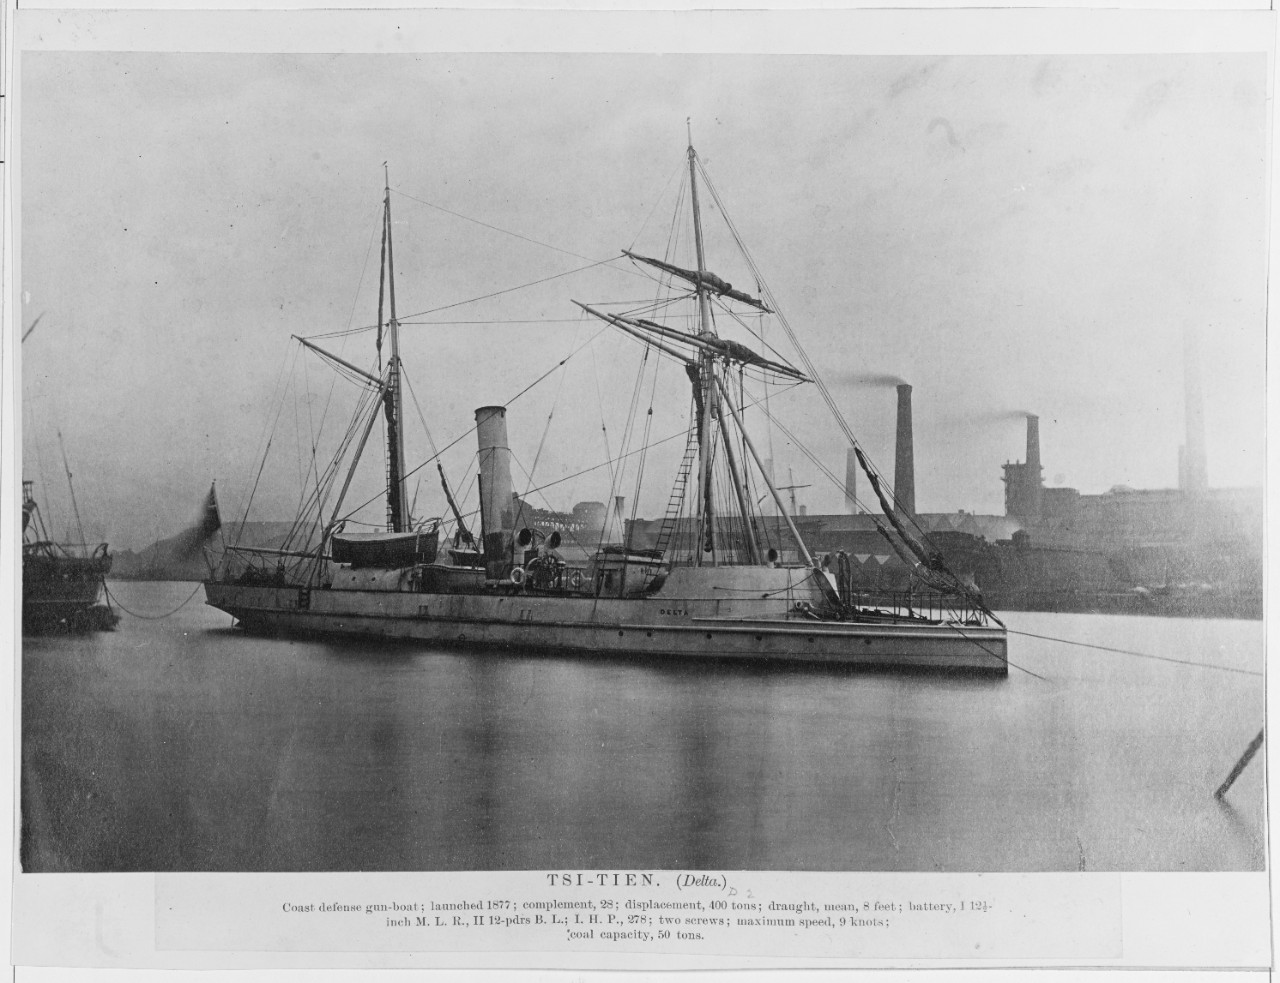 TSI-TIEN (Chinese gunboat, built 1877)